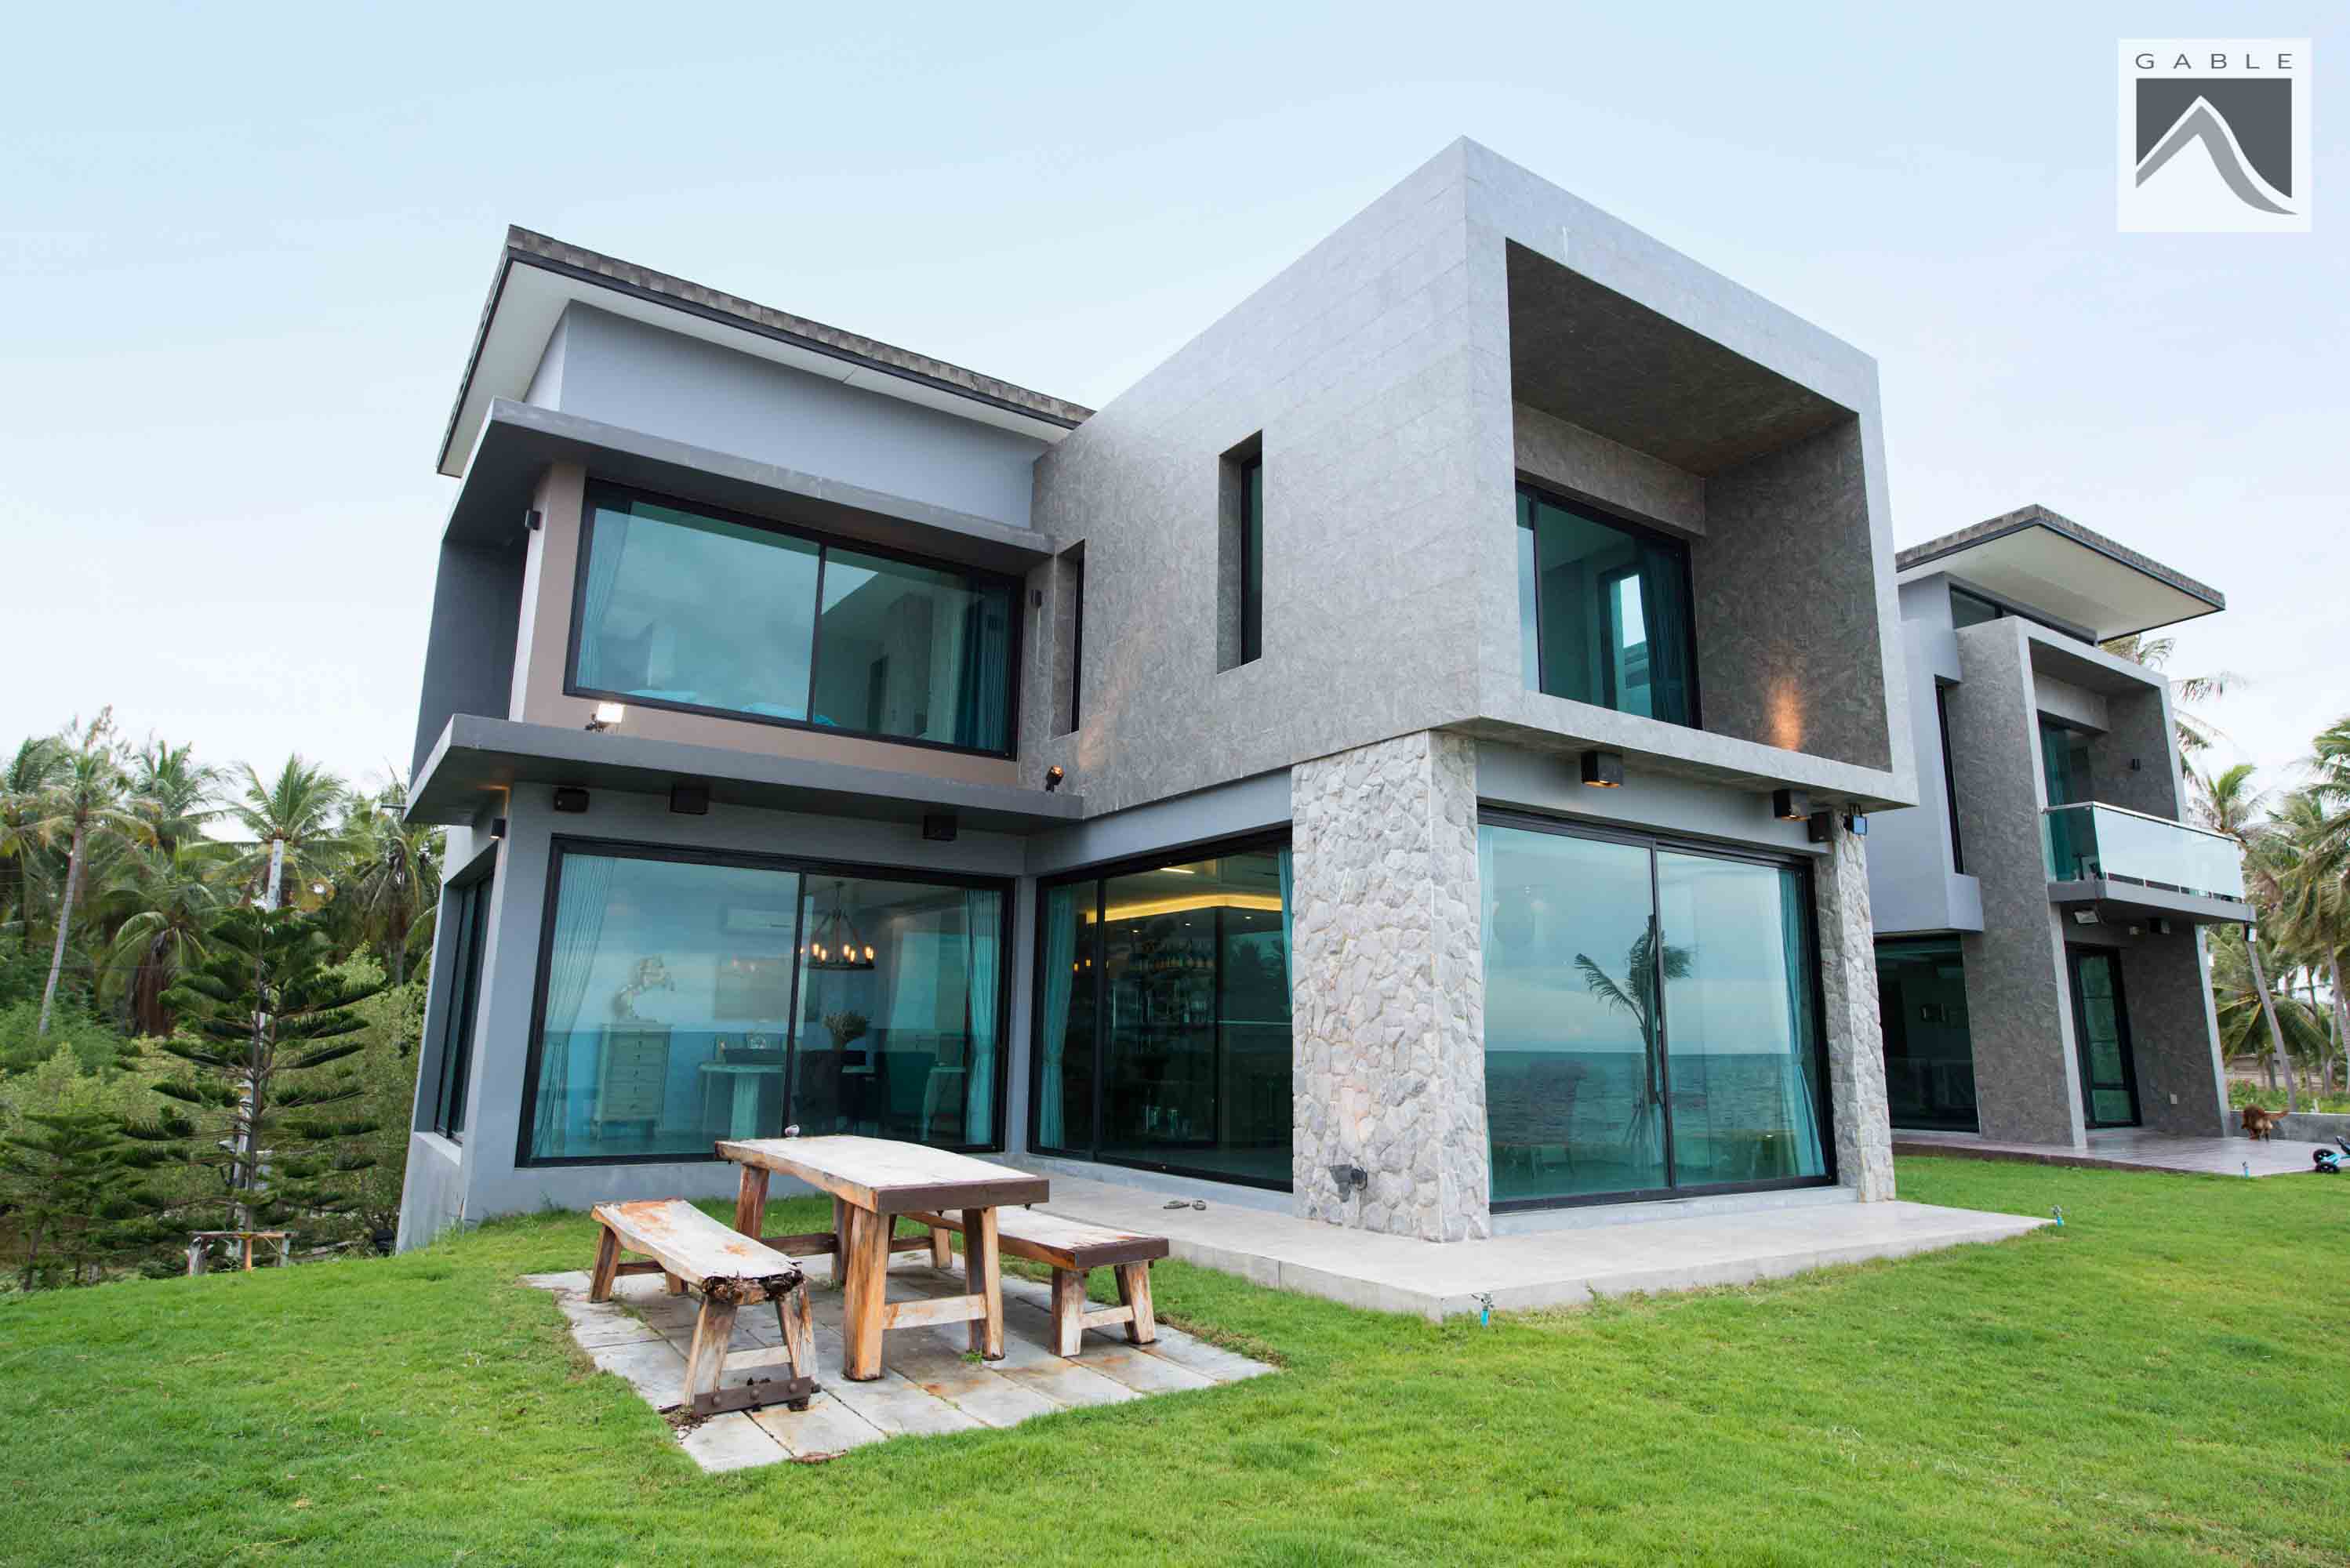 PROJECT บ้านริมทะเล บ่อนอก ประจวบคีรีขันธ์ Gable group รับออกแบบ สร้างบ้าน ตกแต่งภายใน สถาปัตยกรรม